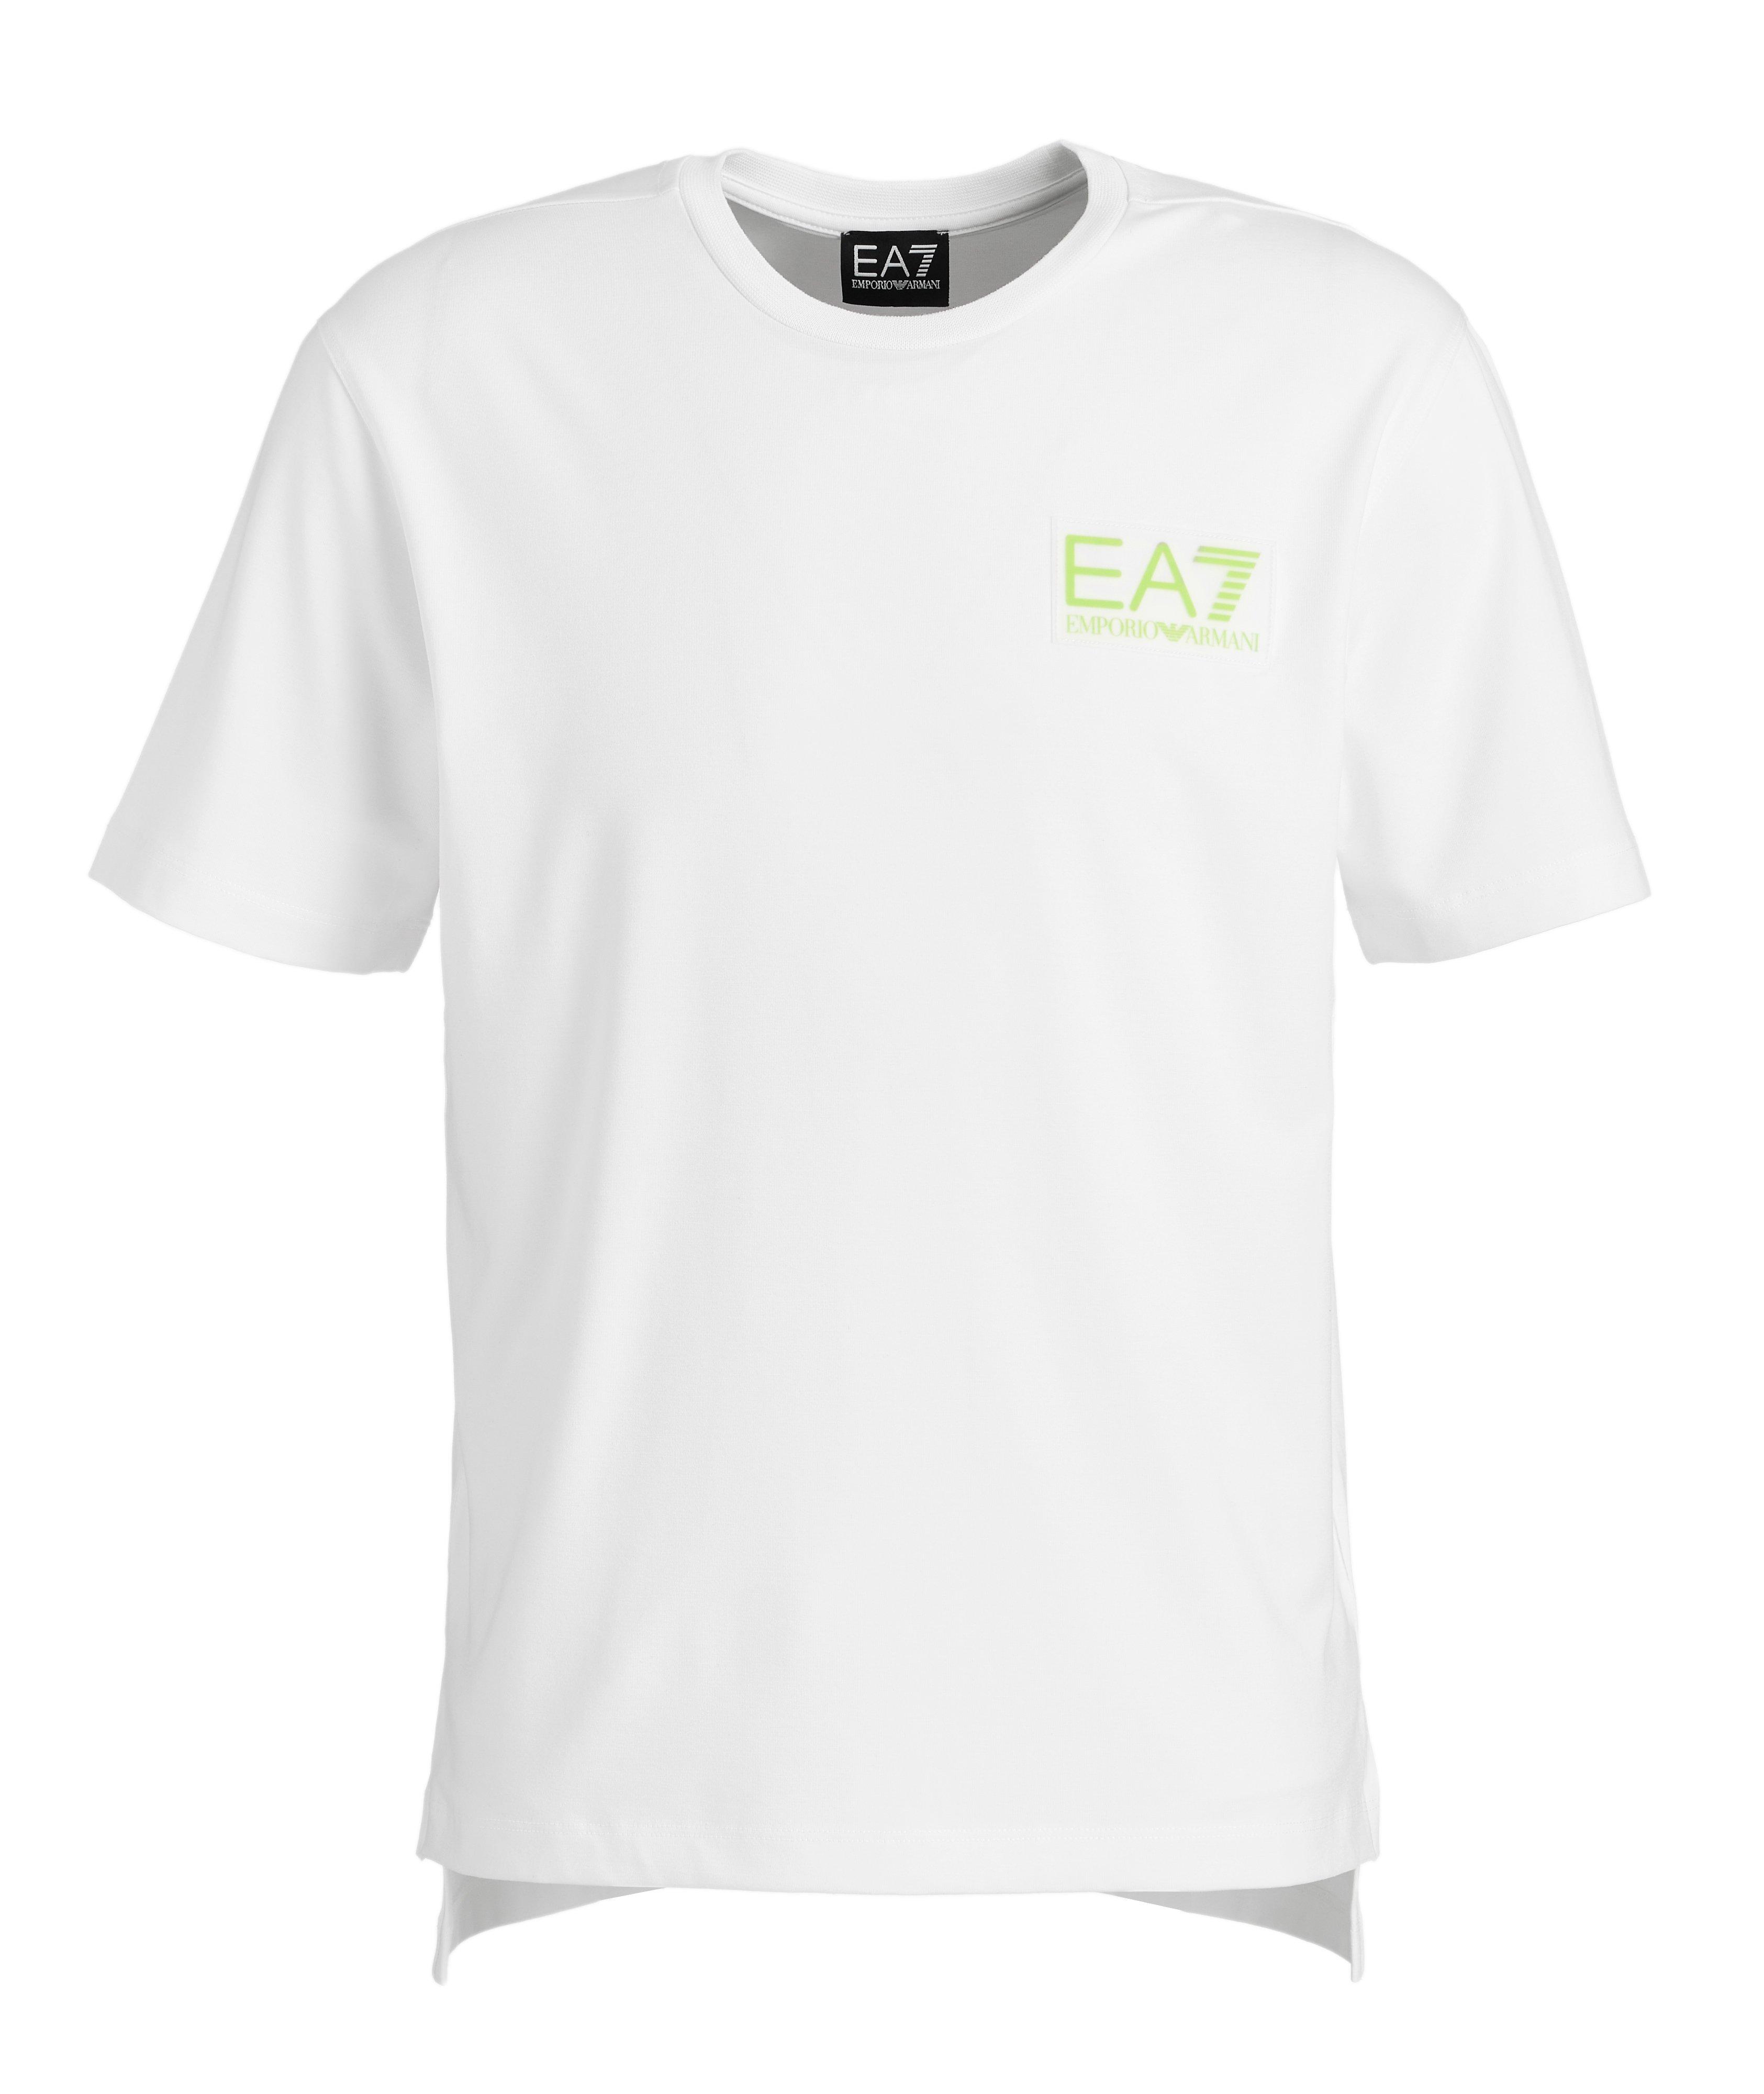 T-shirt, collection EA7 image 0